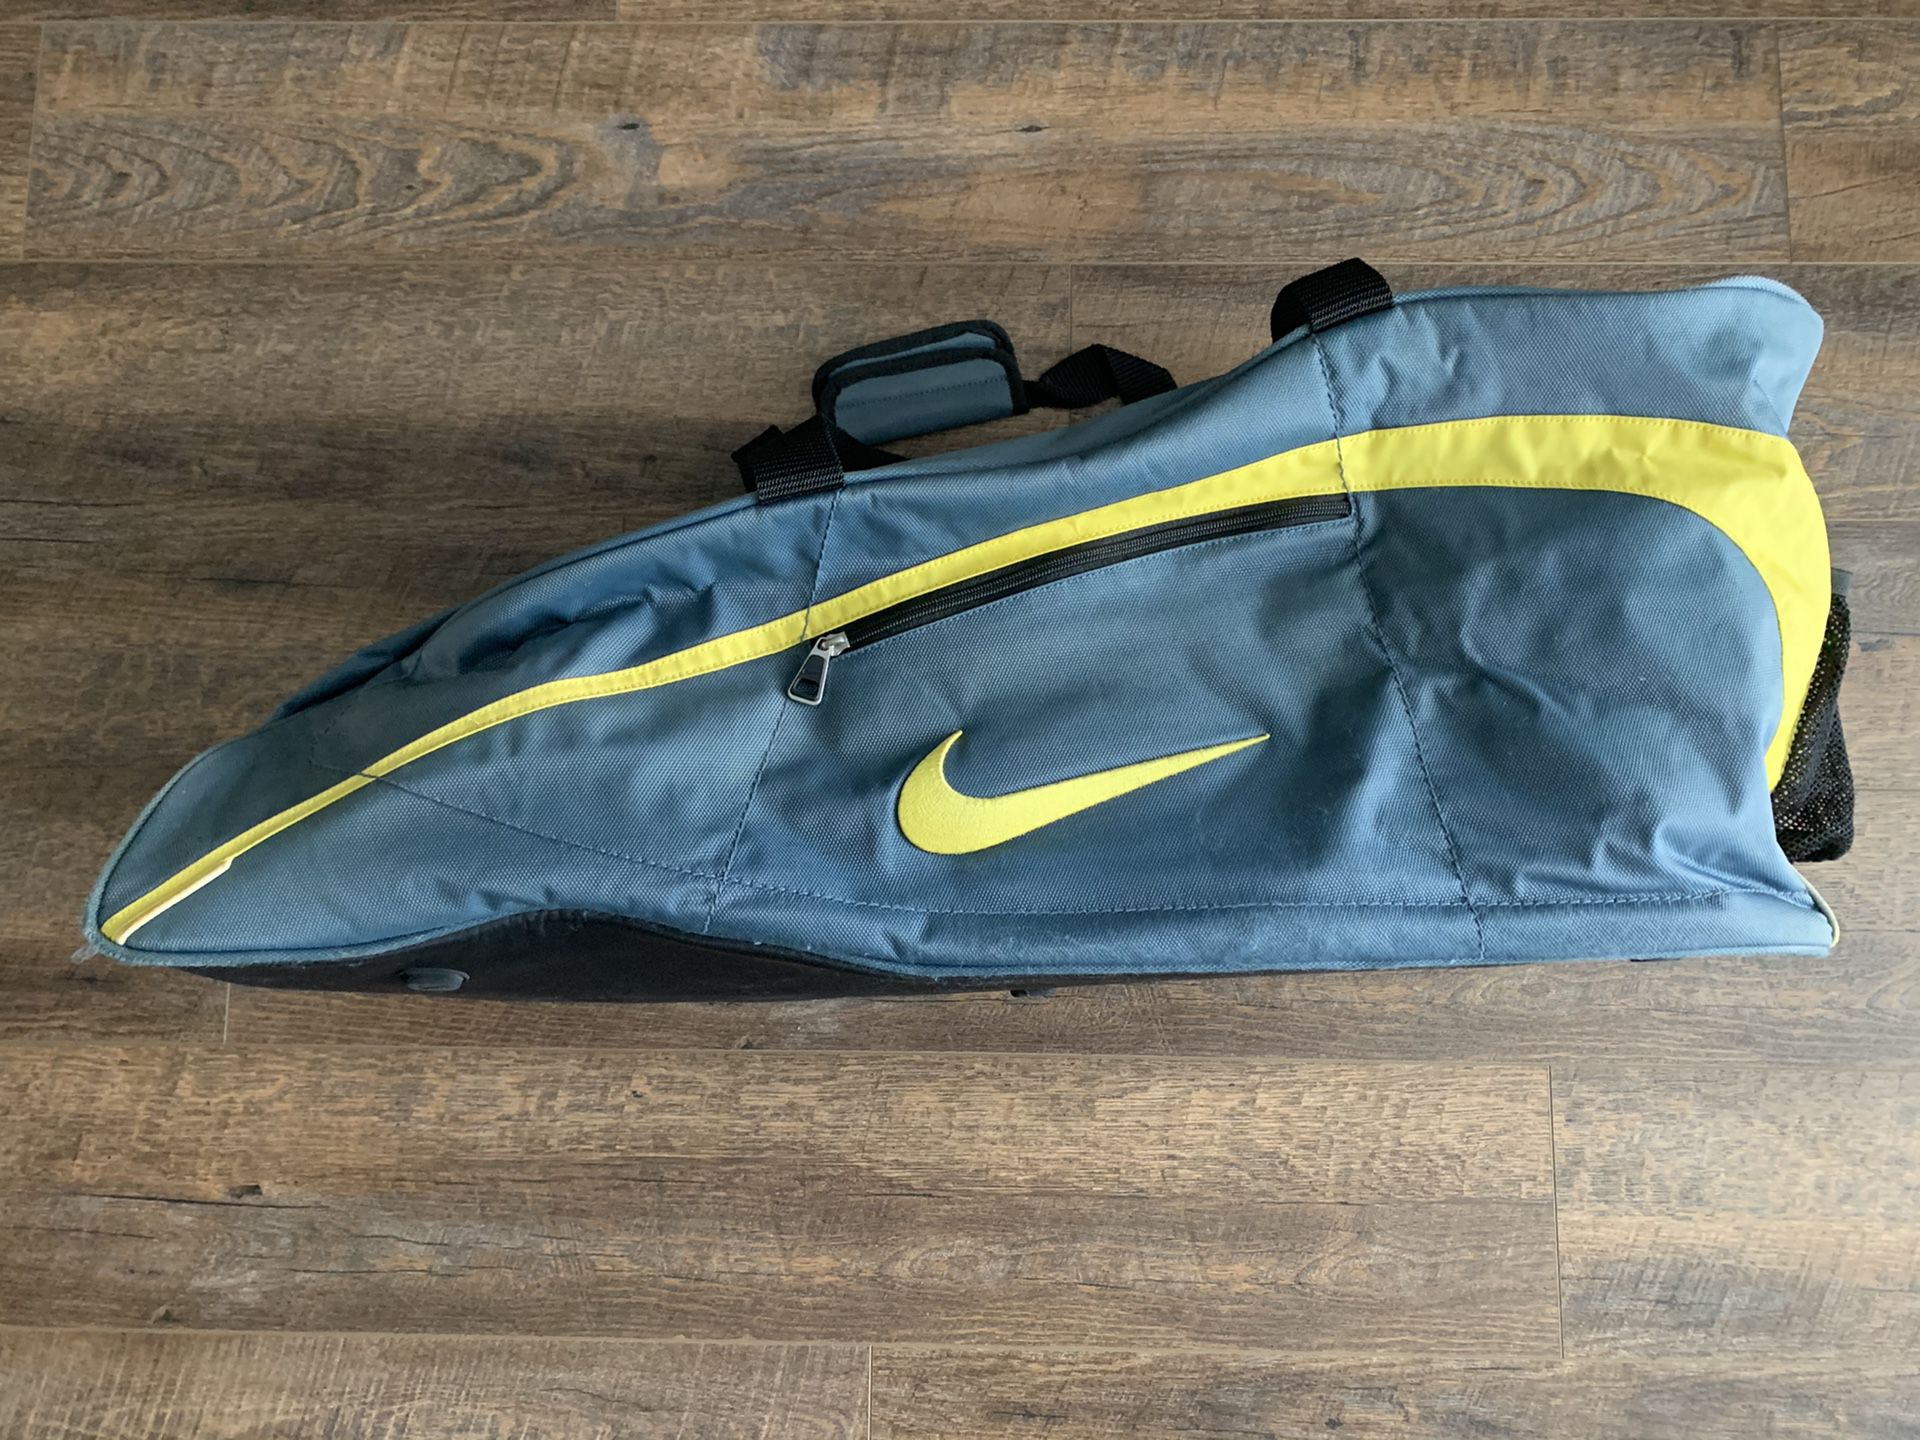 Nike Tennis Bag (6 racket capacity plus!)